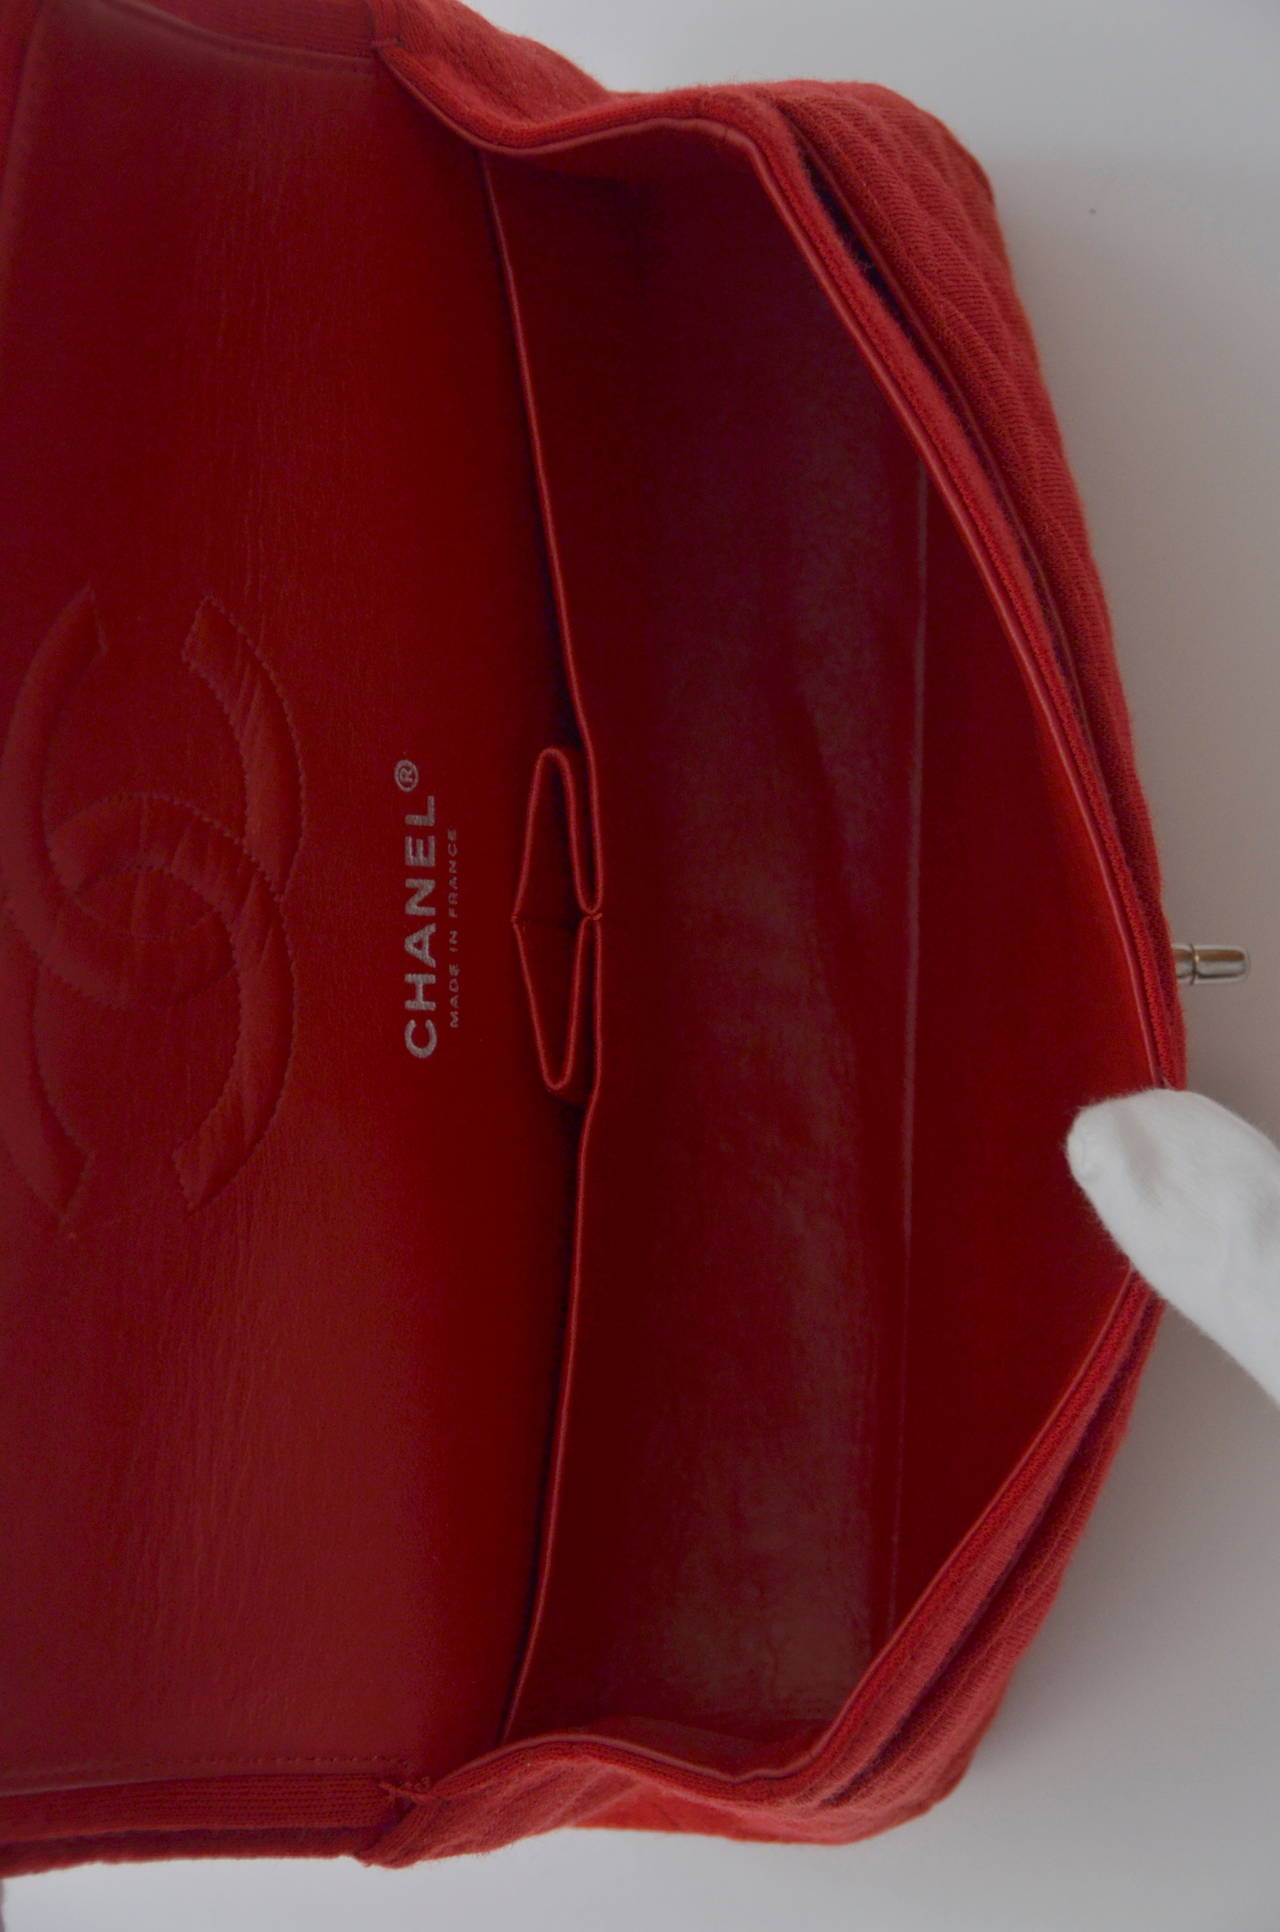 CHANEL Red Lipstick Jersey Double Flap Handbag Mint 3